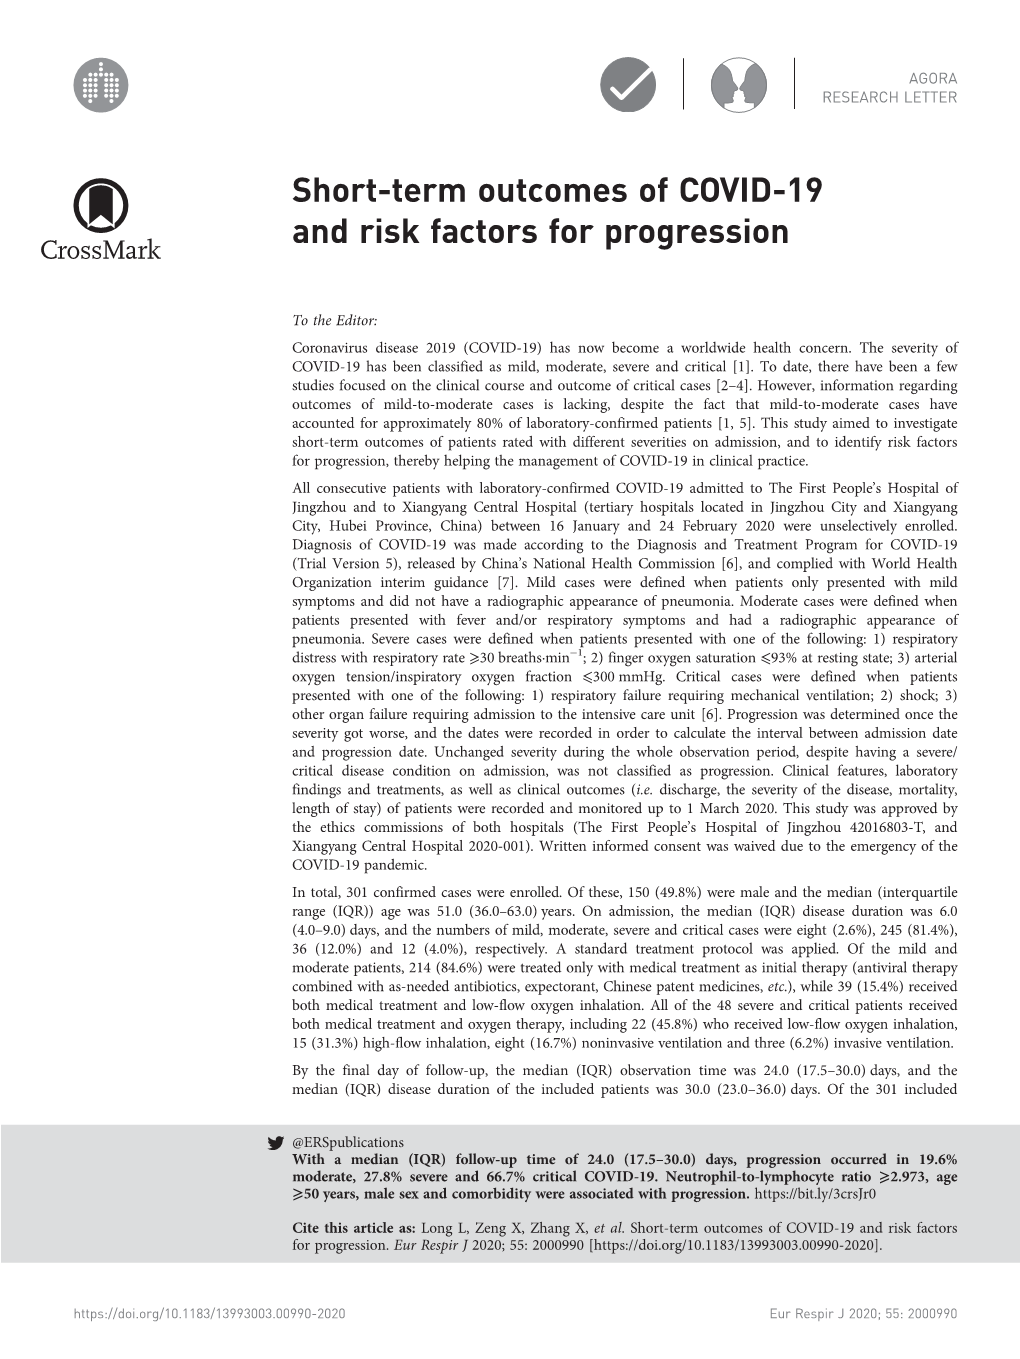 Short-Term Outcomes of COVID-19 and Risk Factors for Progression